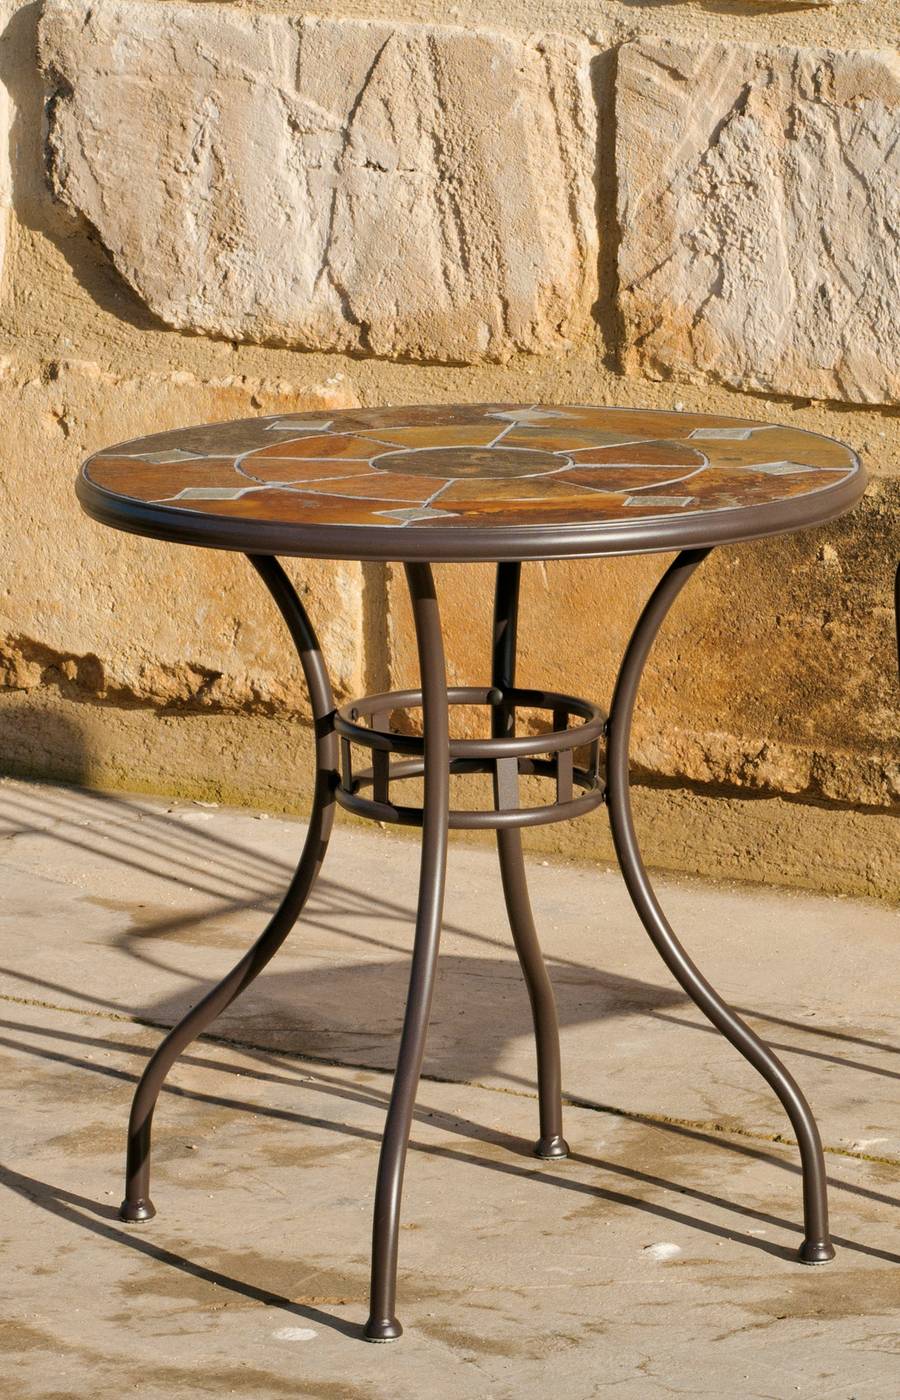 Set Mosaico Luxe Adria-Cancun 70-2 - Conjunto de forja de lujo: mesa con panel mosaico 70 cm + 2 sillones de forja apilables